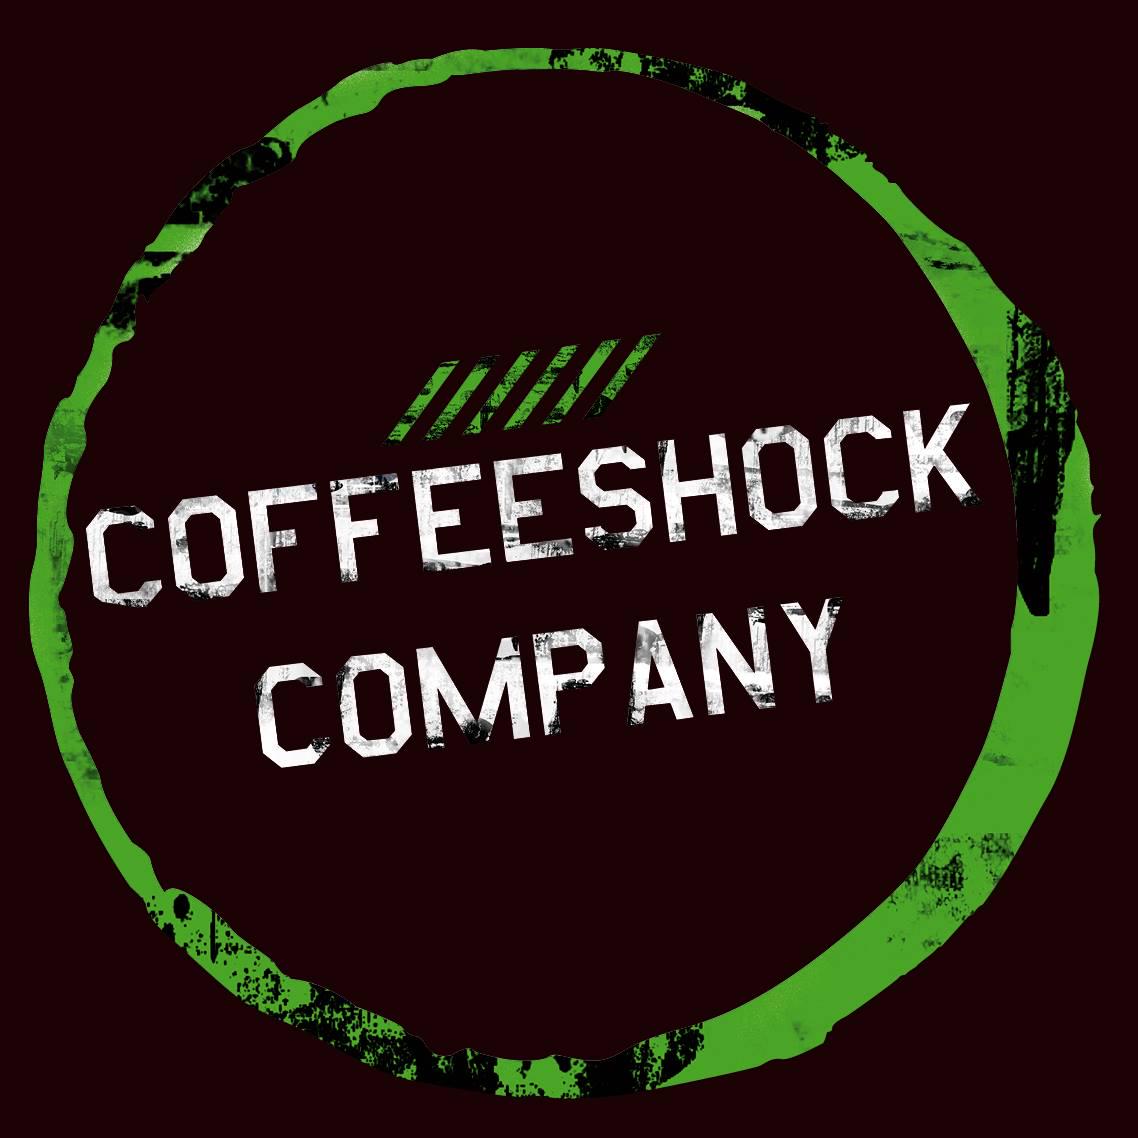 Coffeeshock Company